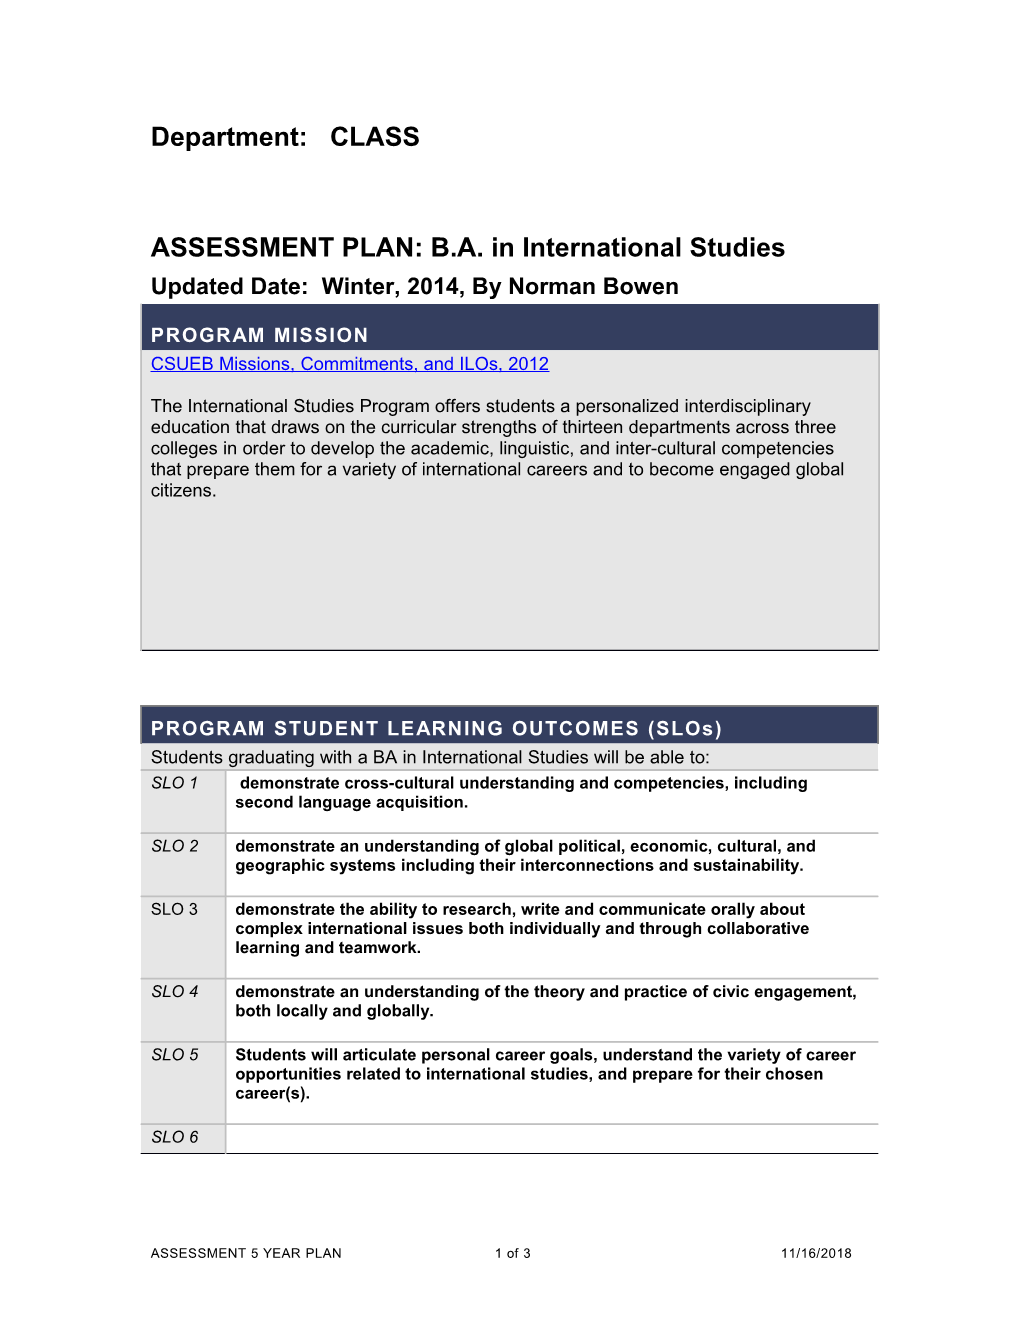 ASSESSMENT PLAN: B.A. in International Studies